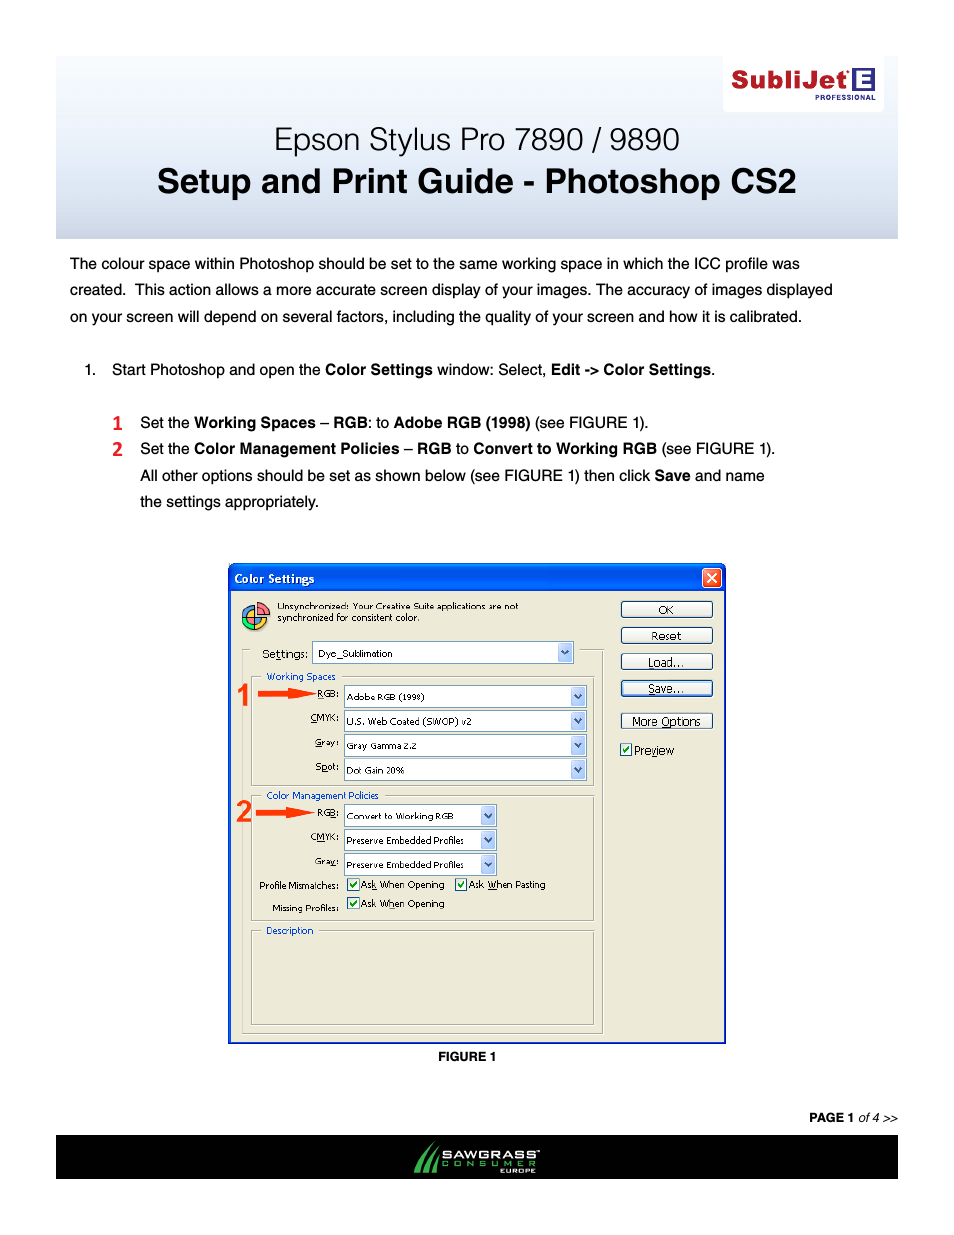 SubliJet E Epson Stylus Pro 9890 (Windows ICC Profile Setup): Print & Setup Guide Photoshop CS2